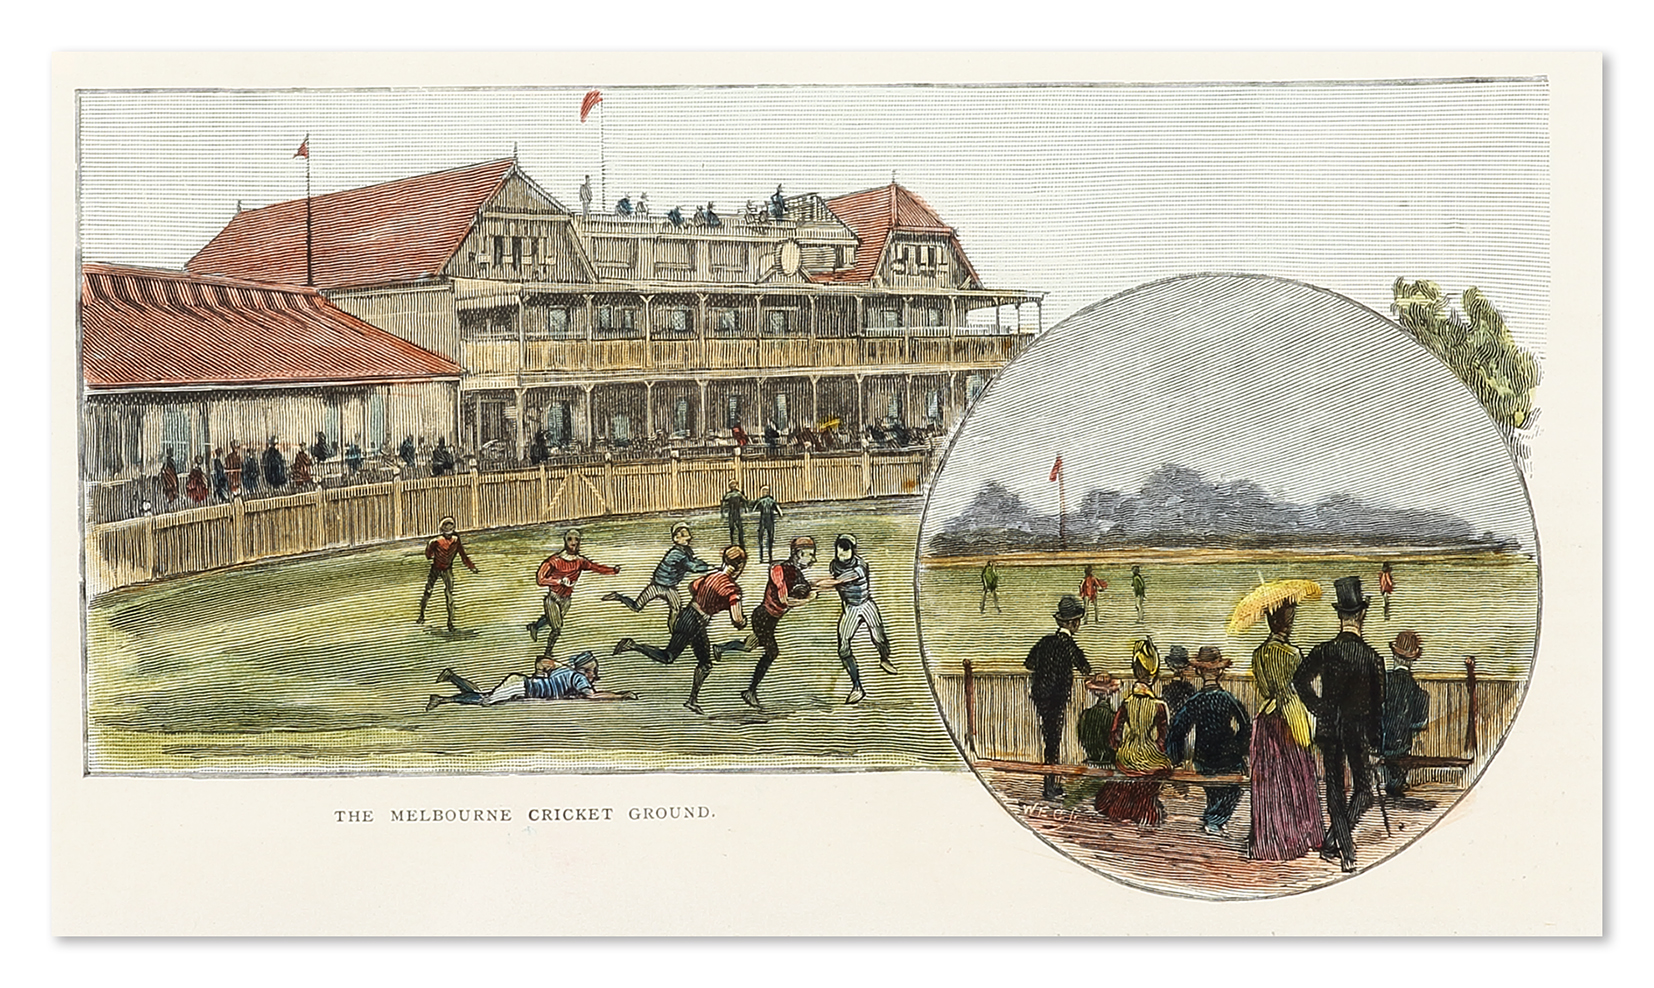 The Melbourne Cricket Ground. (MCG-Richmond) - Antique View from 1887